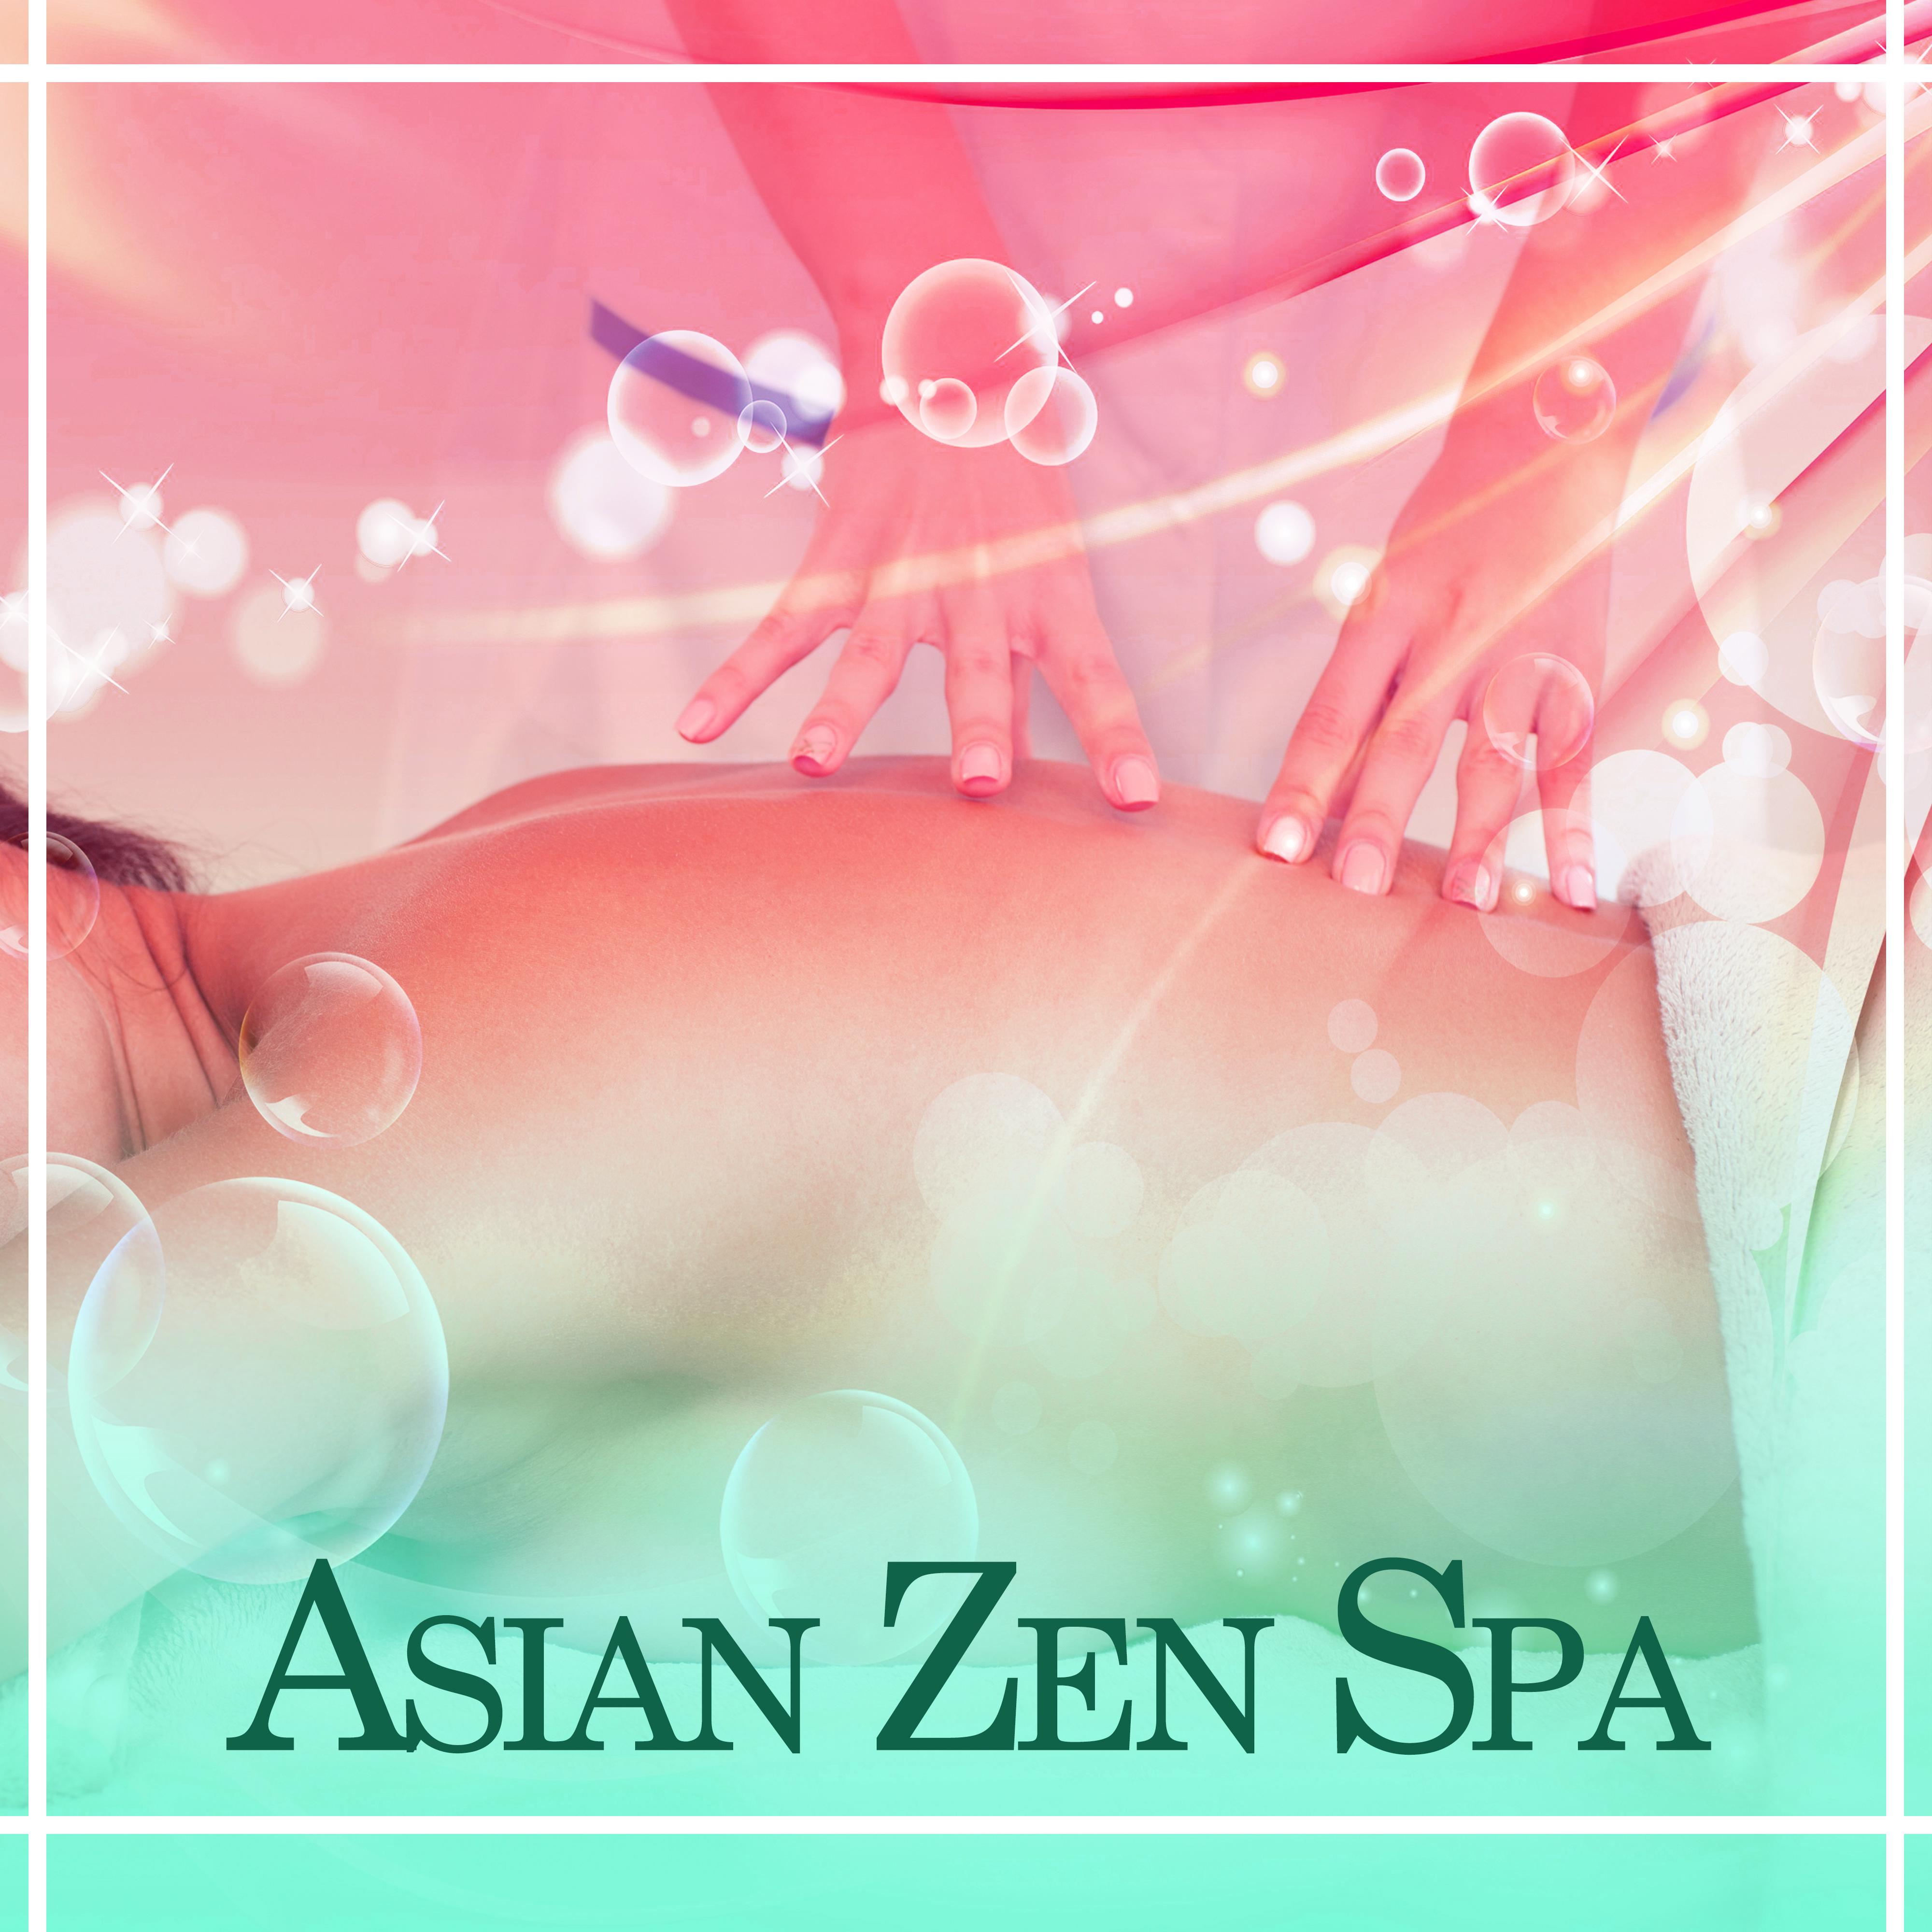 Asian Zen Spa  Relaxation Wellness, Deep Meditation, Buddha Lounge, Train Your Mind, Relaxing Music, Pure Massage, Spa Dream